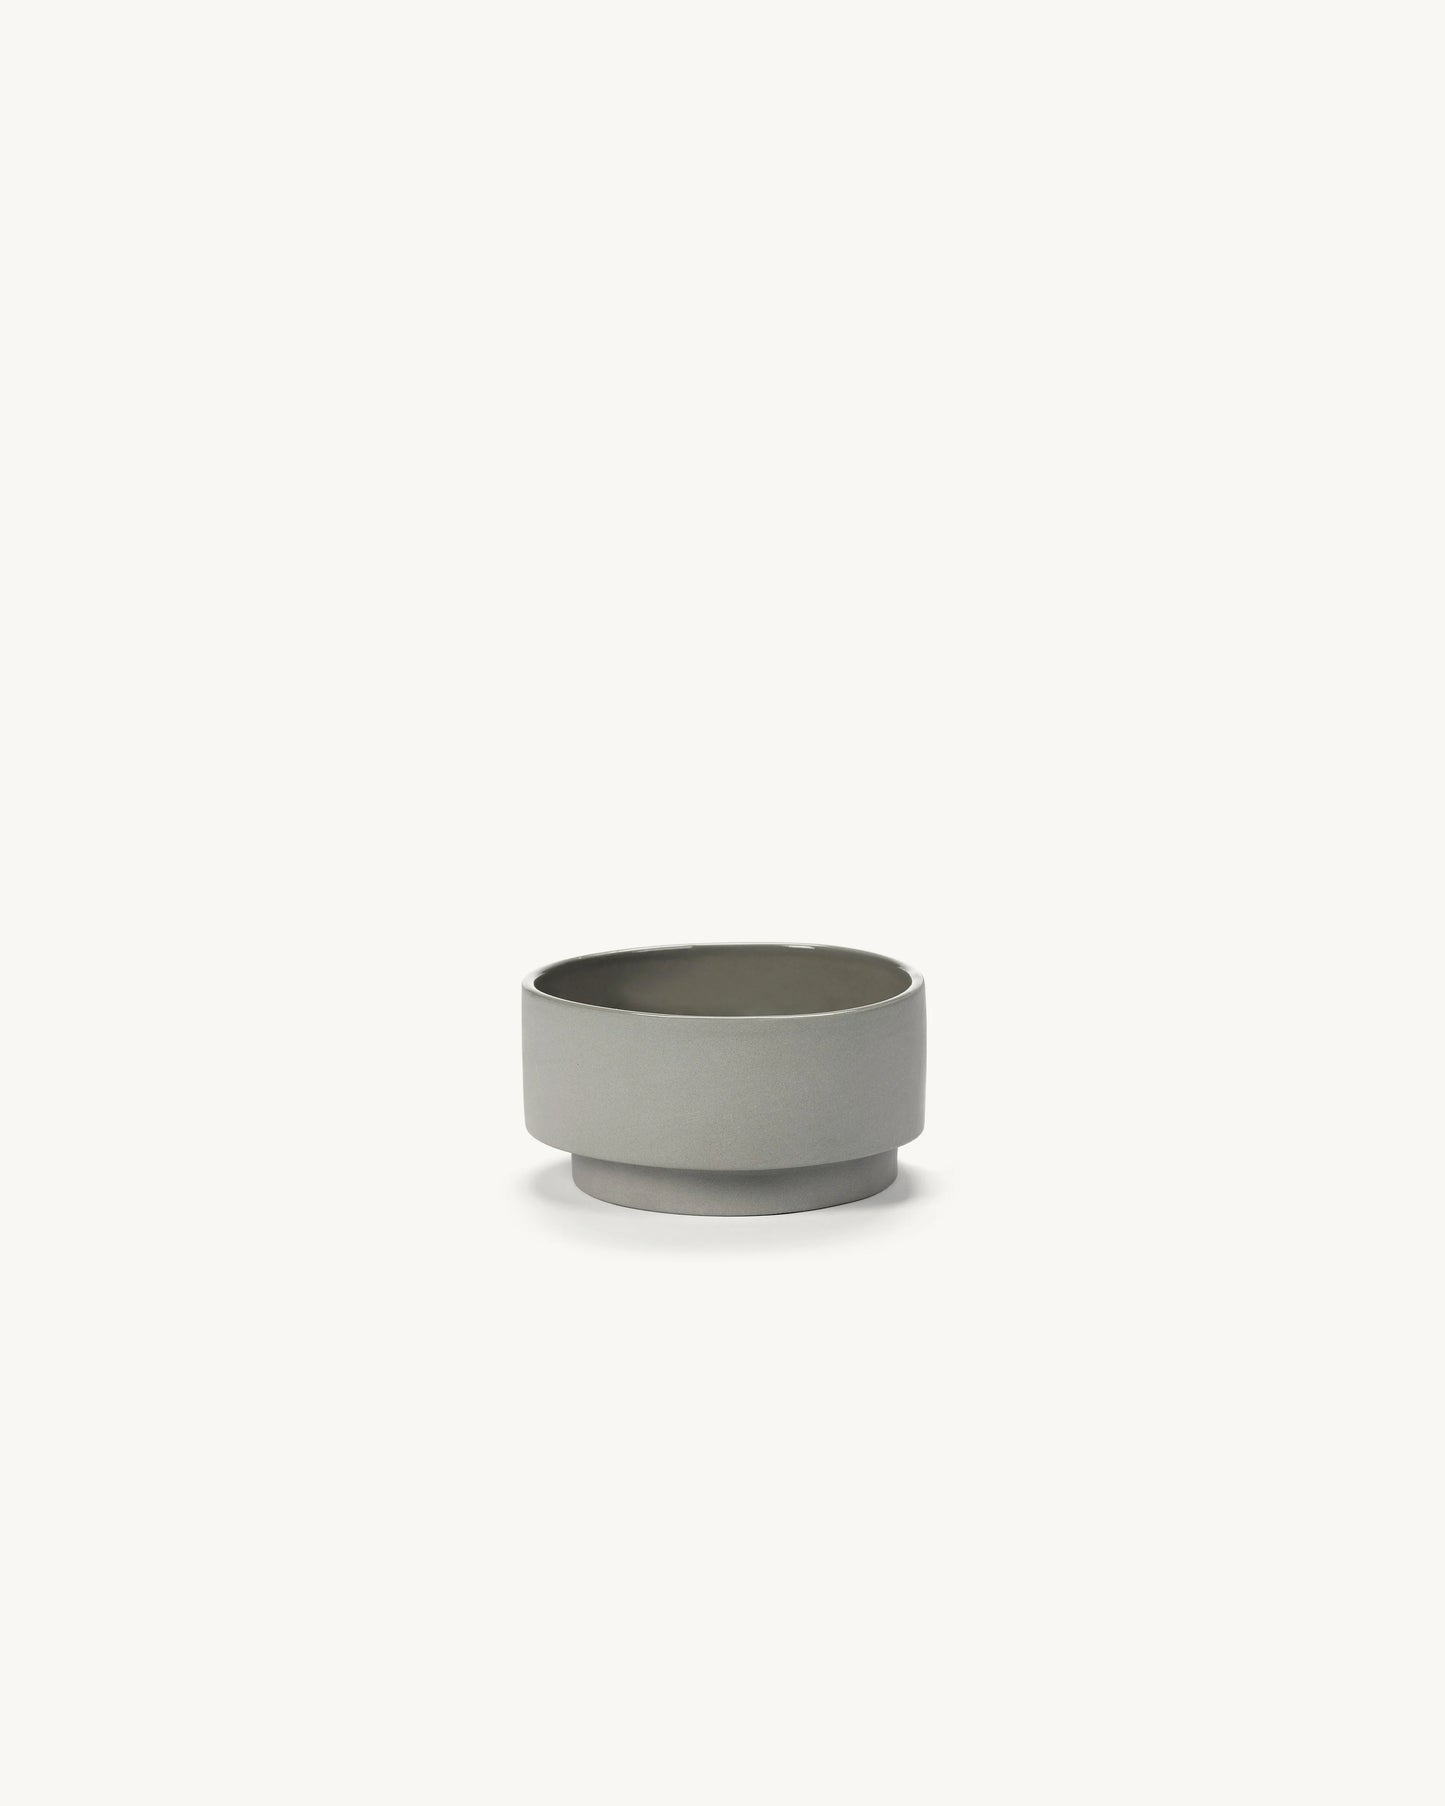 Valerie Objects Inner Circle Bowl, light grey by Maarten Baas - $34.00